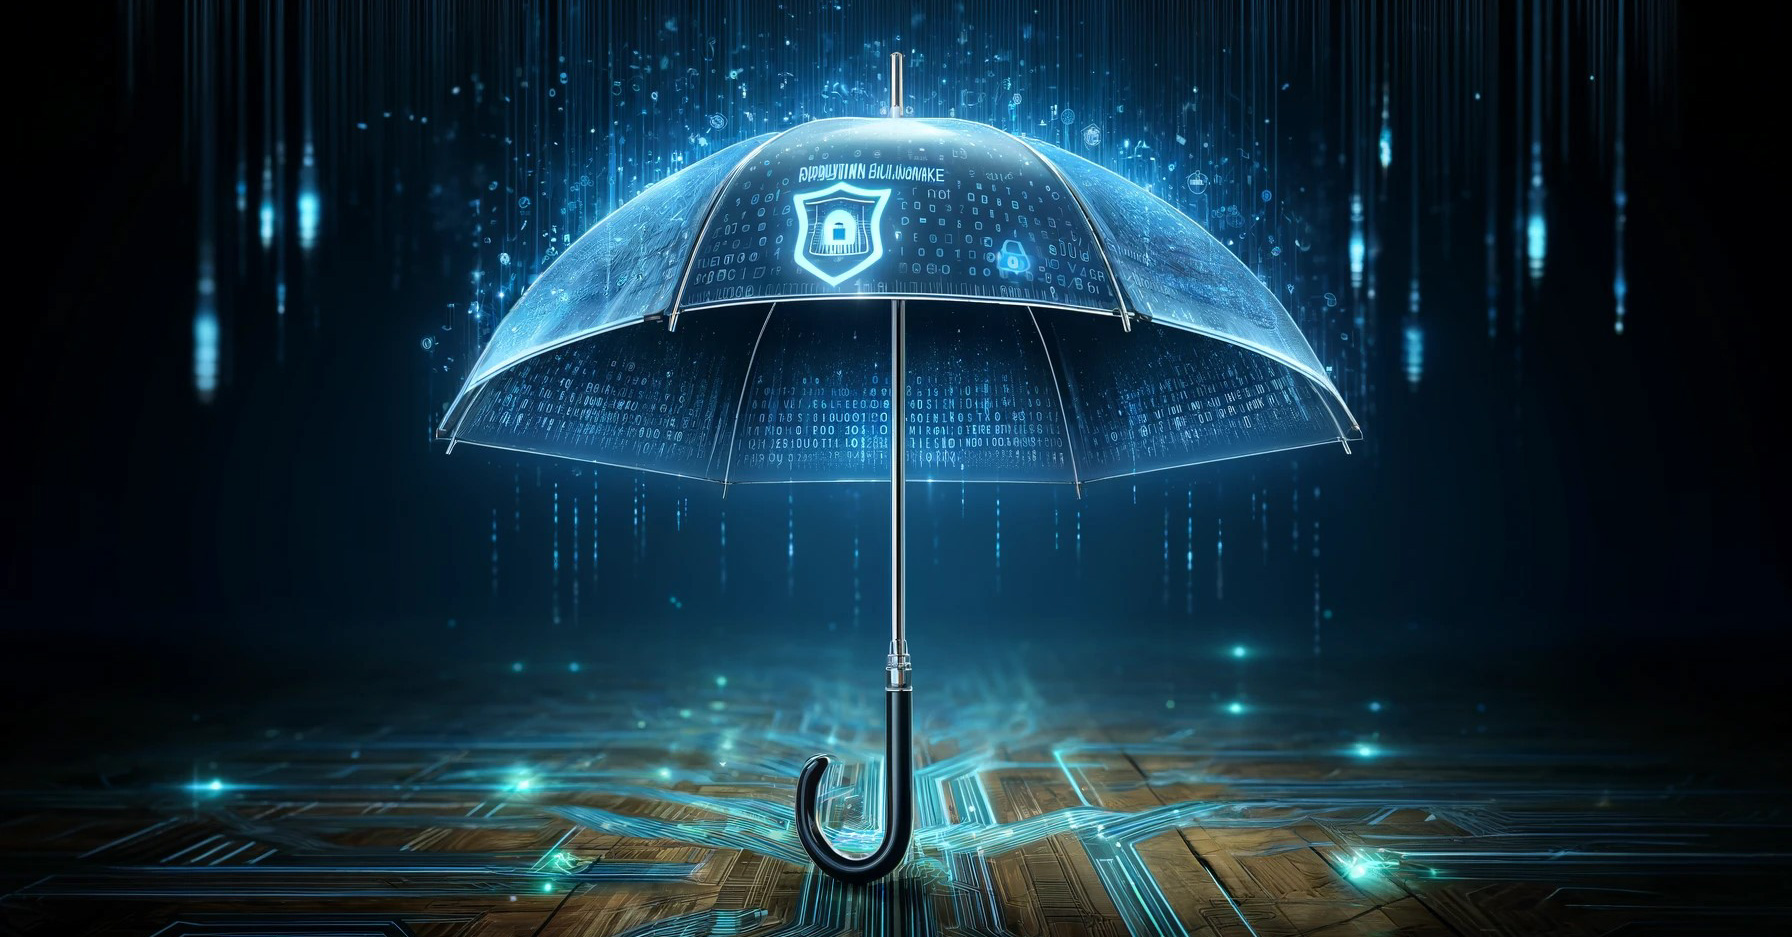 cyber insurance conceptual image of umbrella protecting circuit board